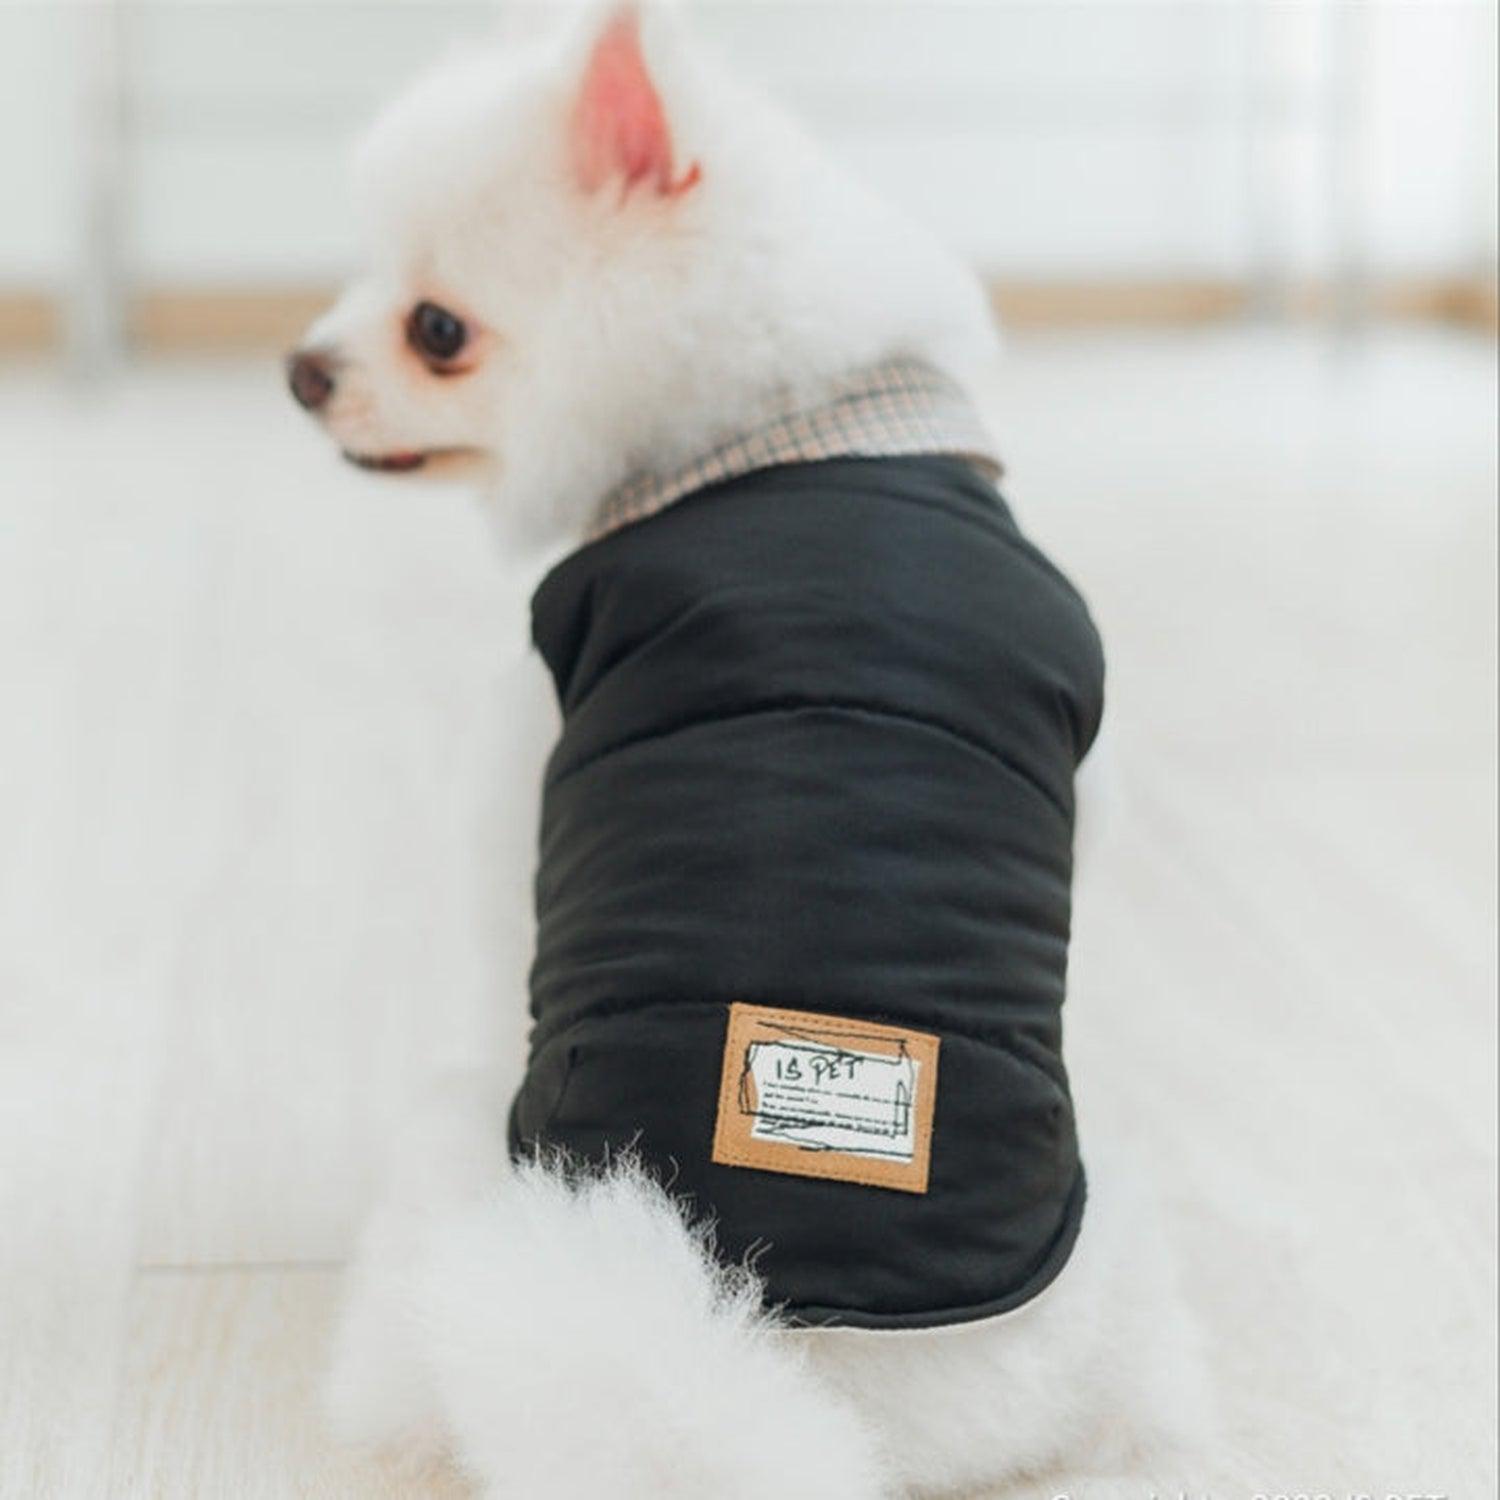 Smart Look Padded Dog Coat